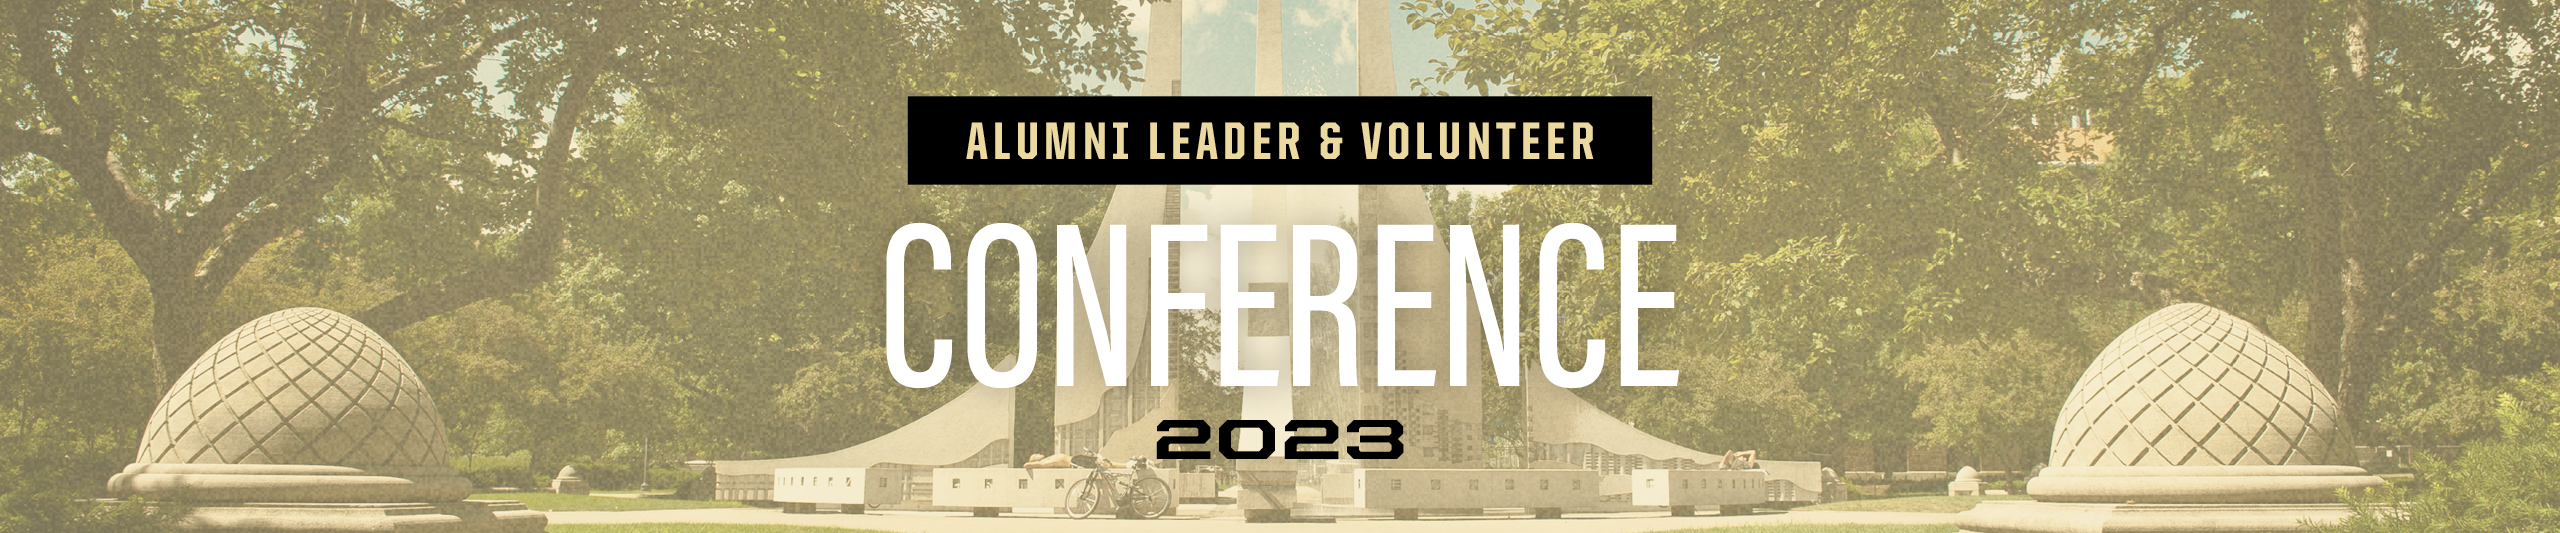 Alumni Leader & Volunteer Conference 2023 web graphic